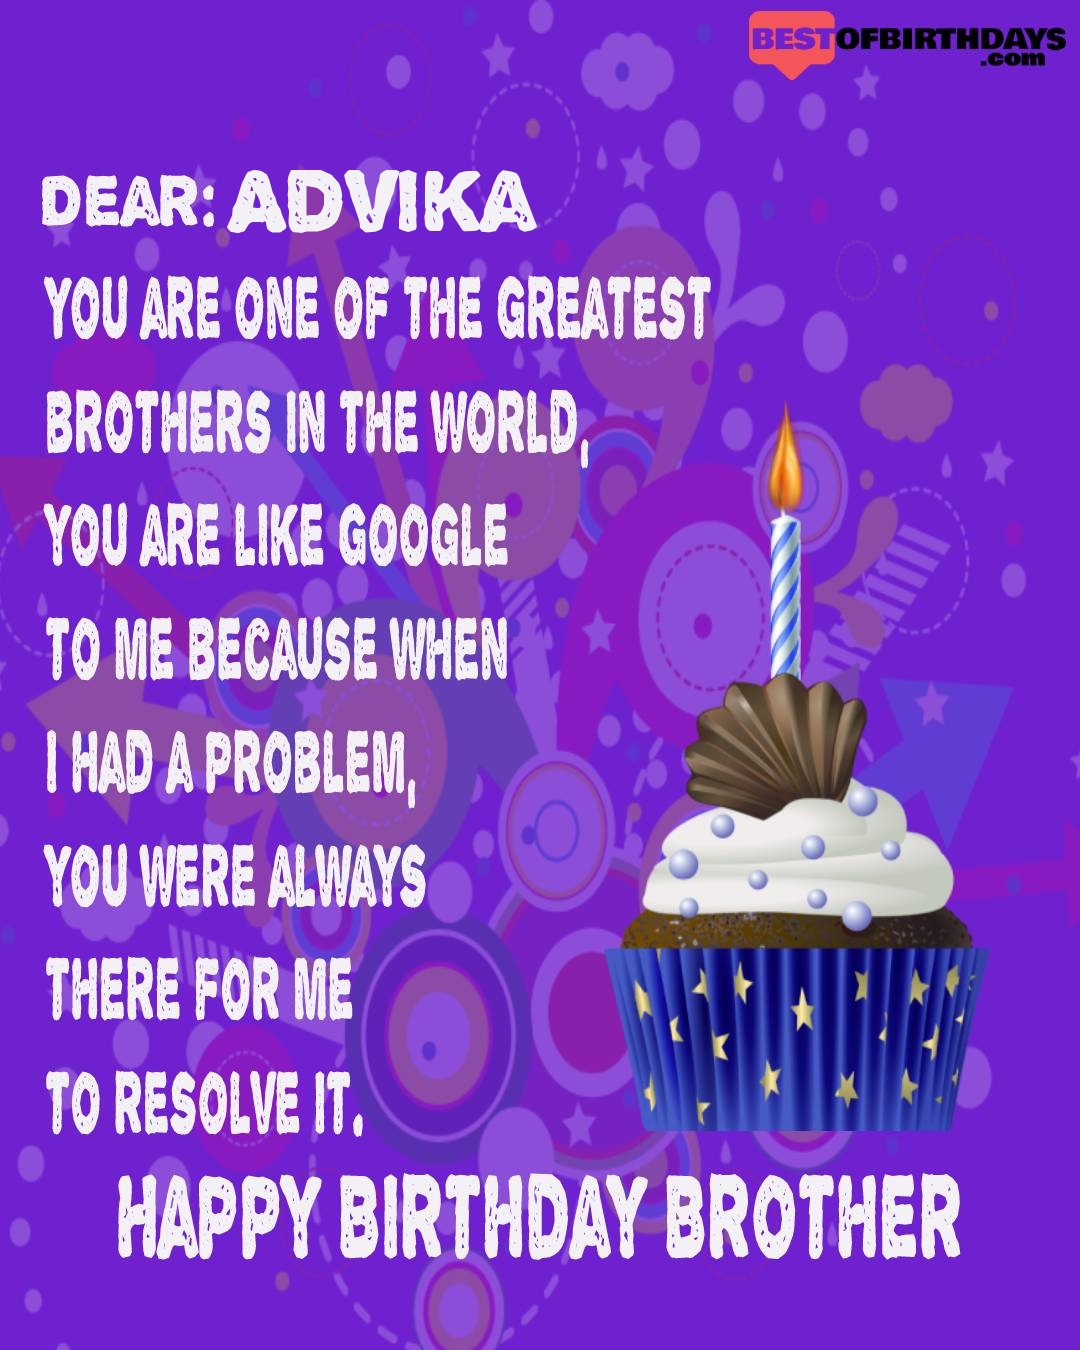 Happy birthday advika bhai brother bro